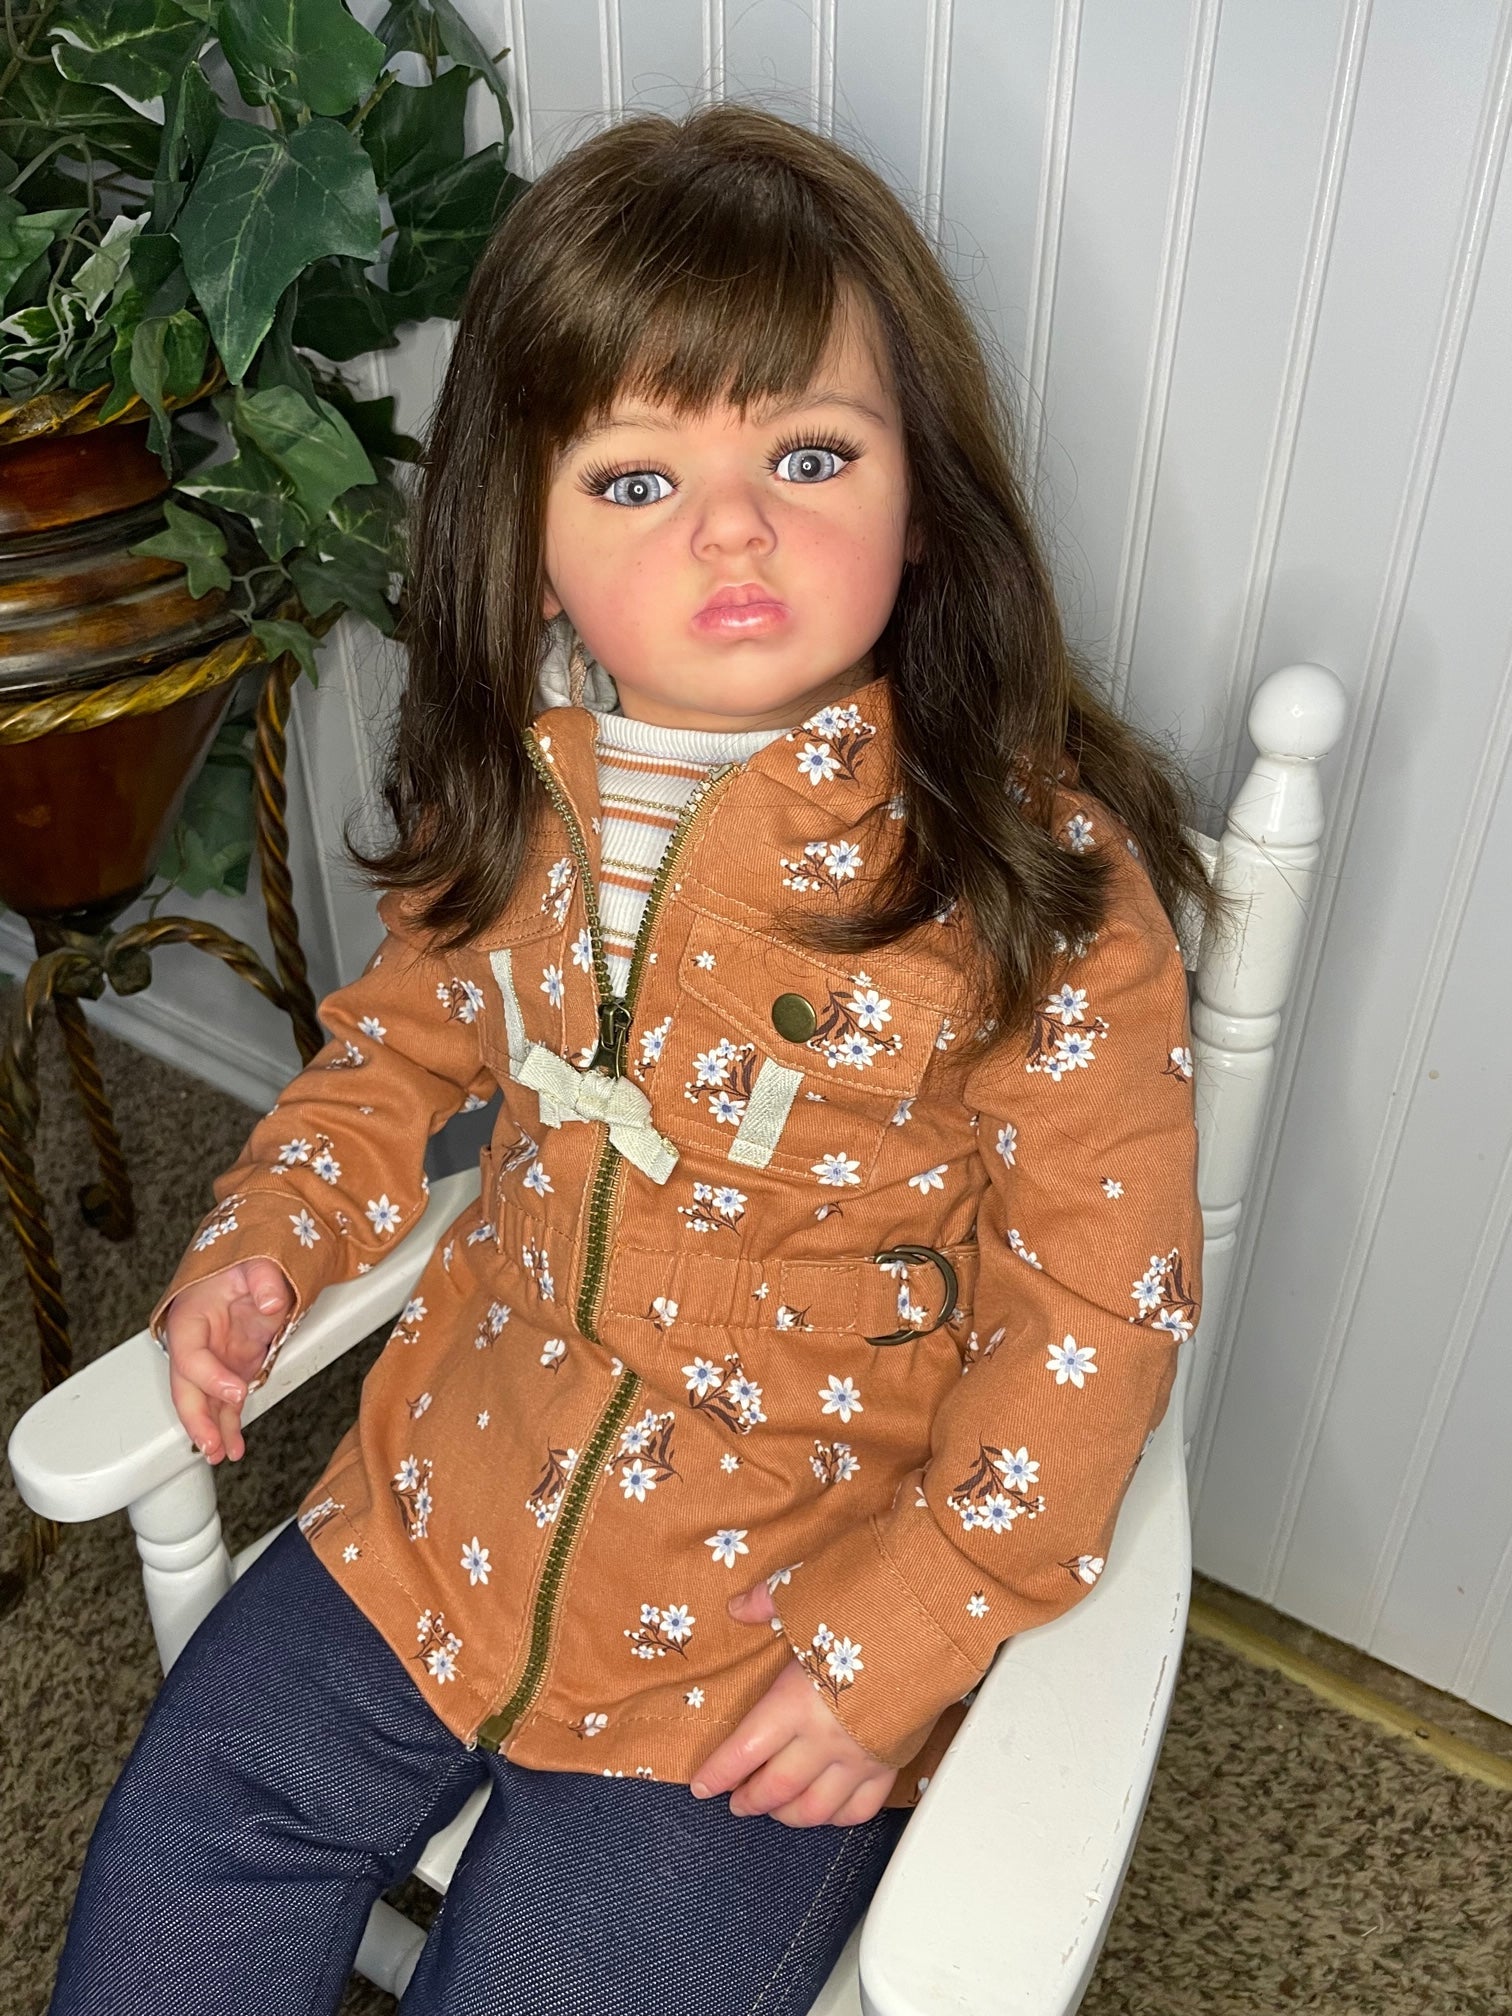 Reborn Toddler Doll - Emilia by Natali Blick